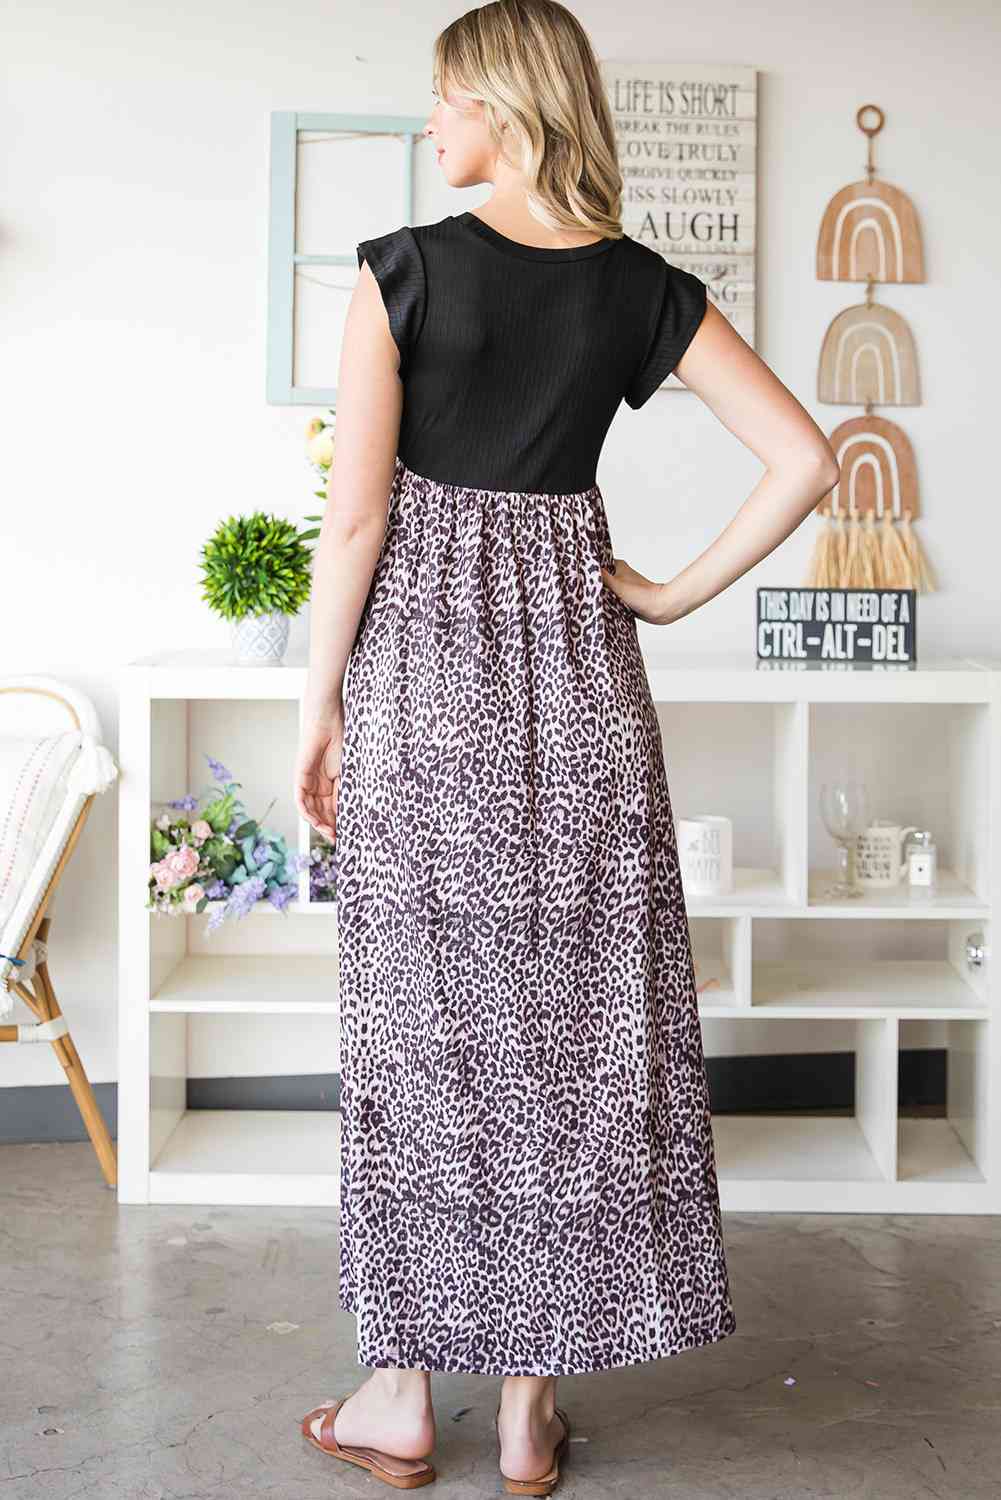 Leopard Print Round Neck Maxi Dress with Pockets - TRENDMELO